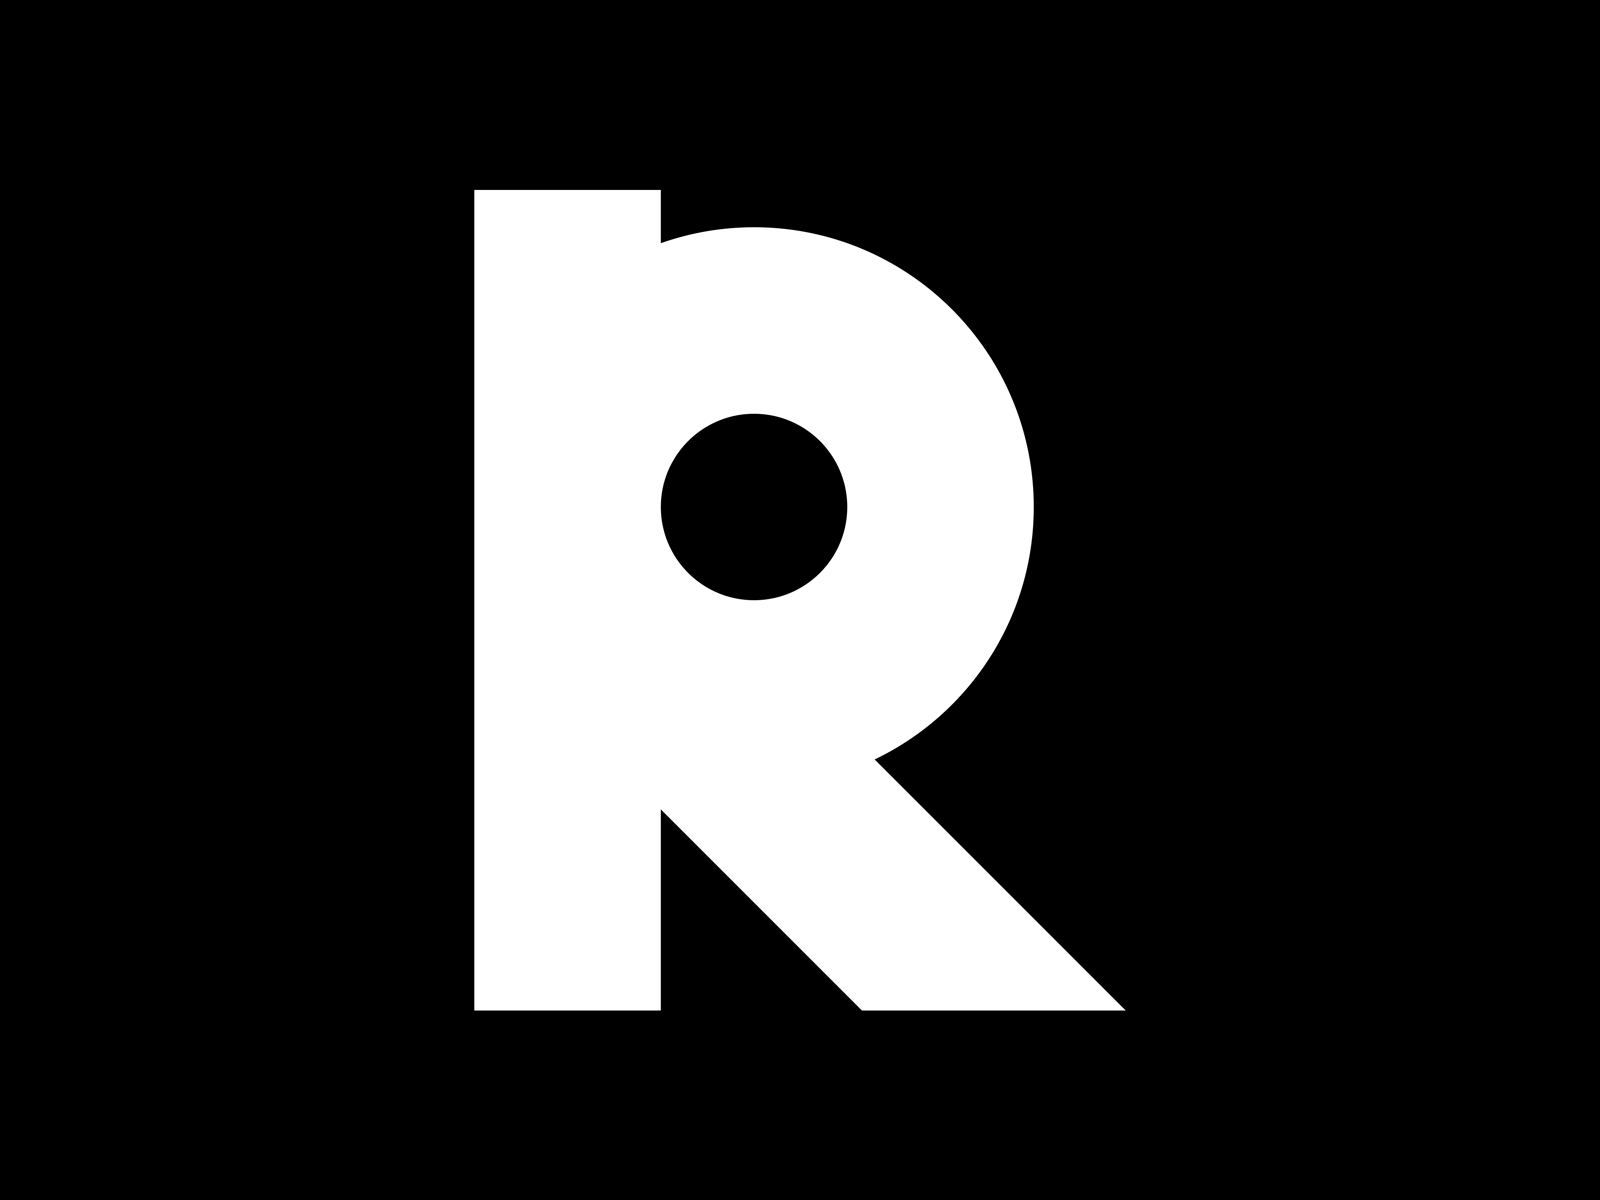 R for Ricky brand brand identity branding identity letterform logo logomark symbol trademark visual identity